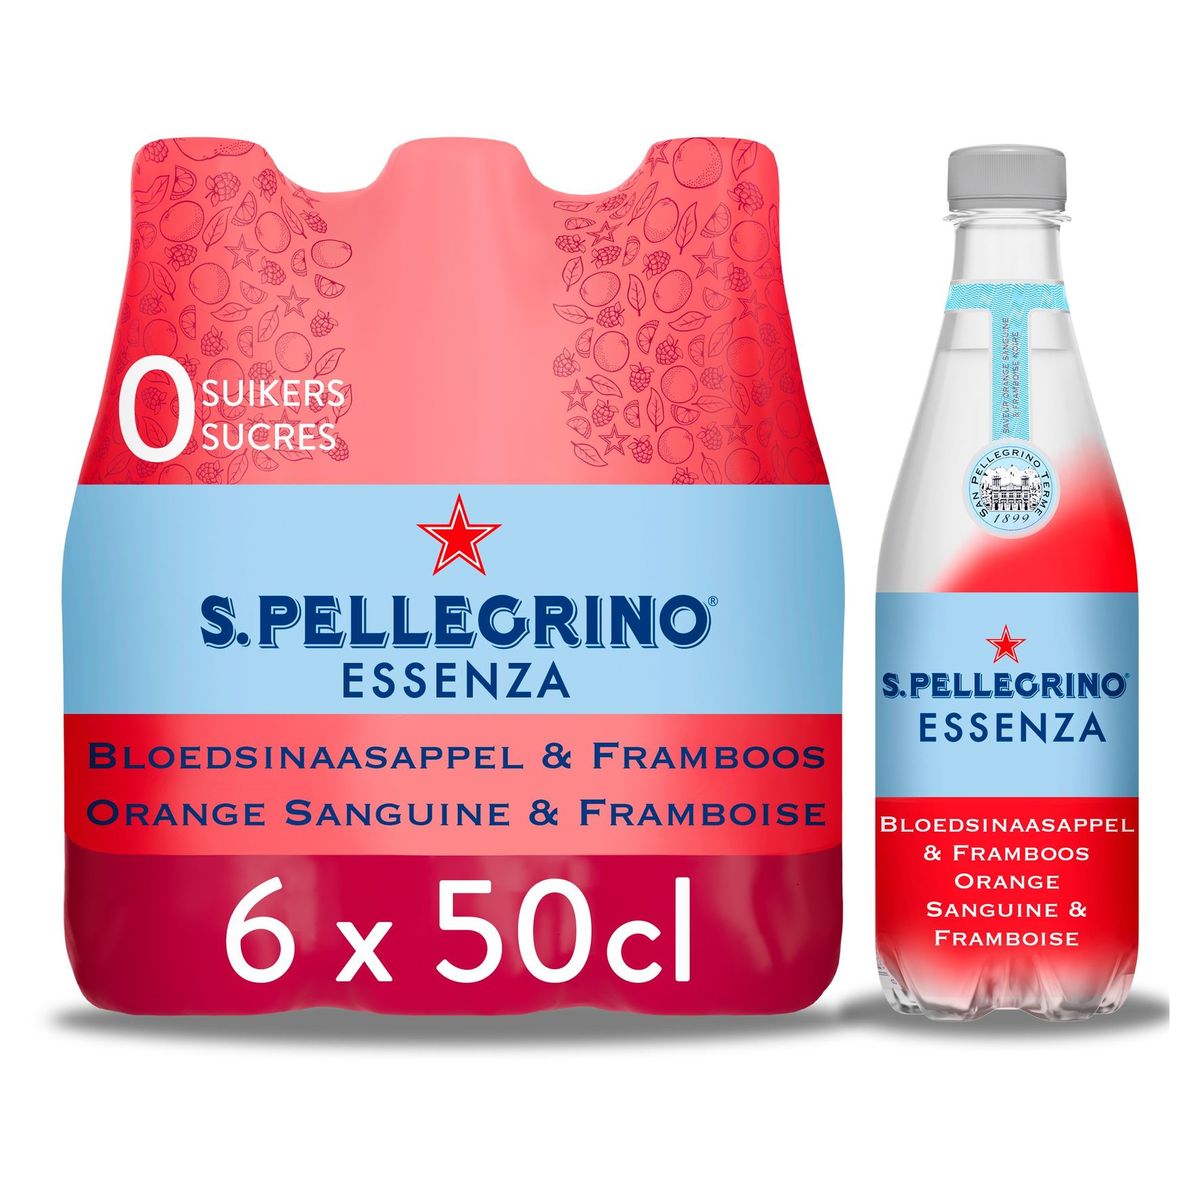 S.PELLEGRINO Essenza Bloedsinaasappel & Framboos PET 6 x 50 cl